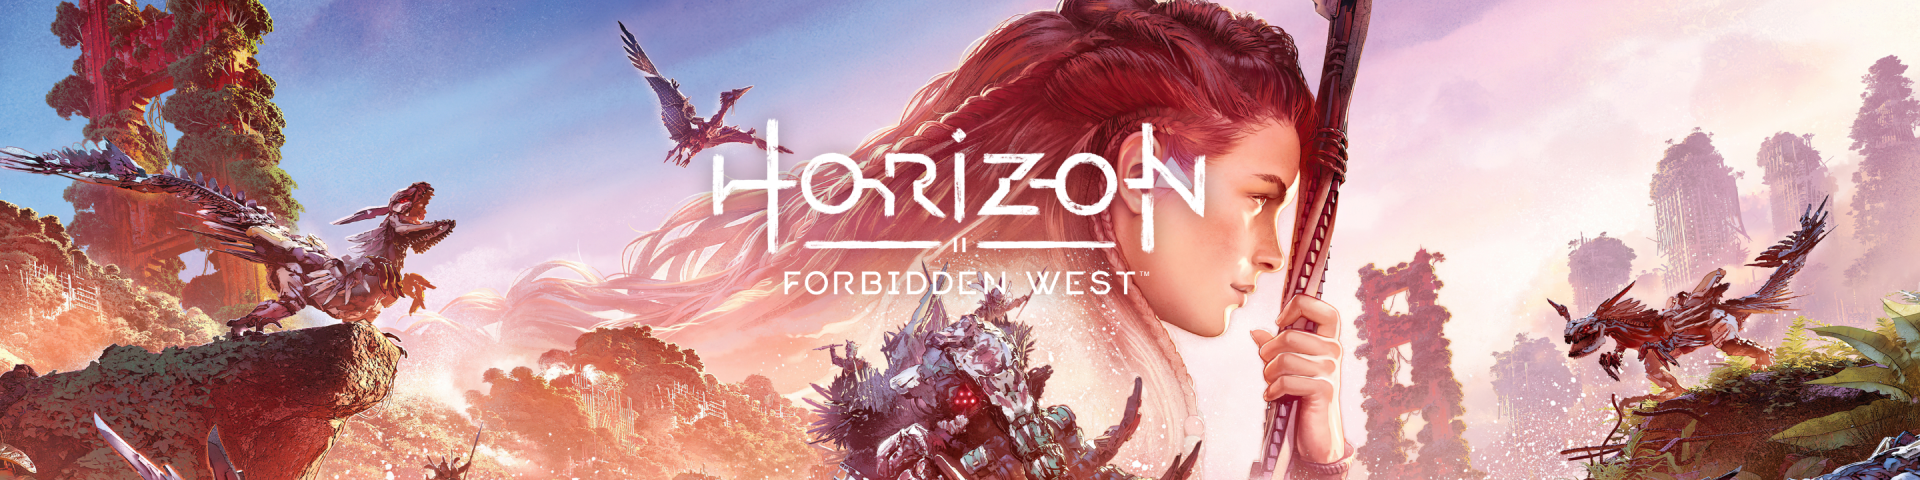 Guerrilla PS4 Horizon Forbidden West